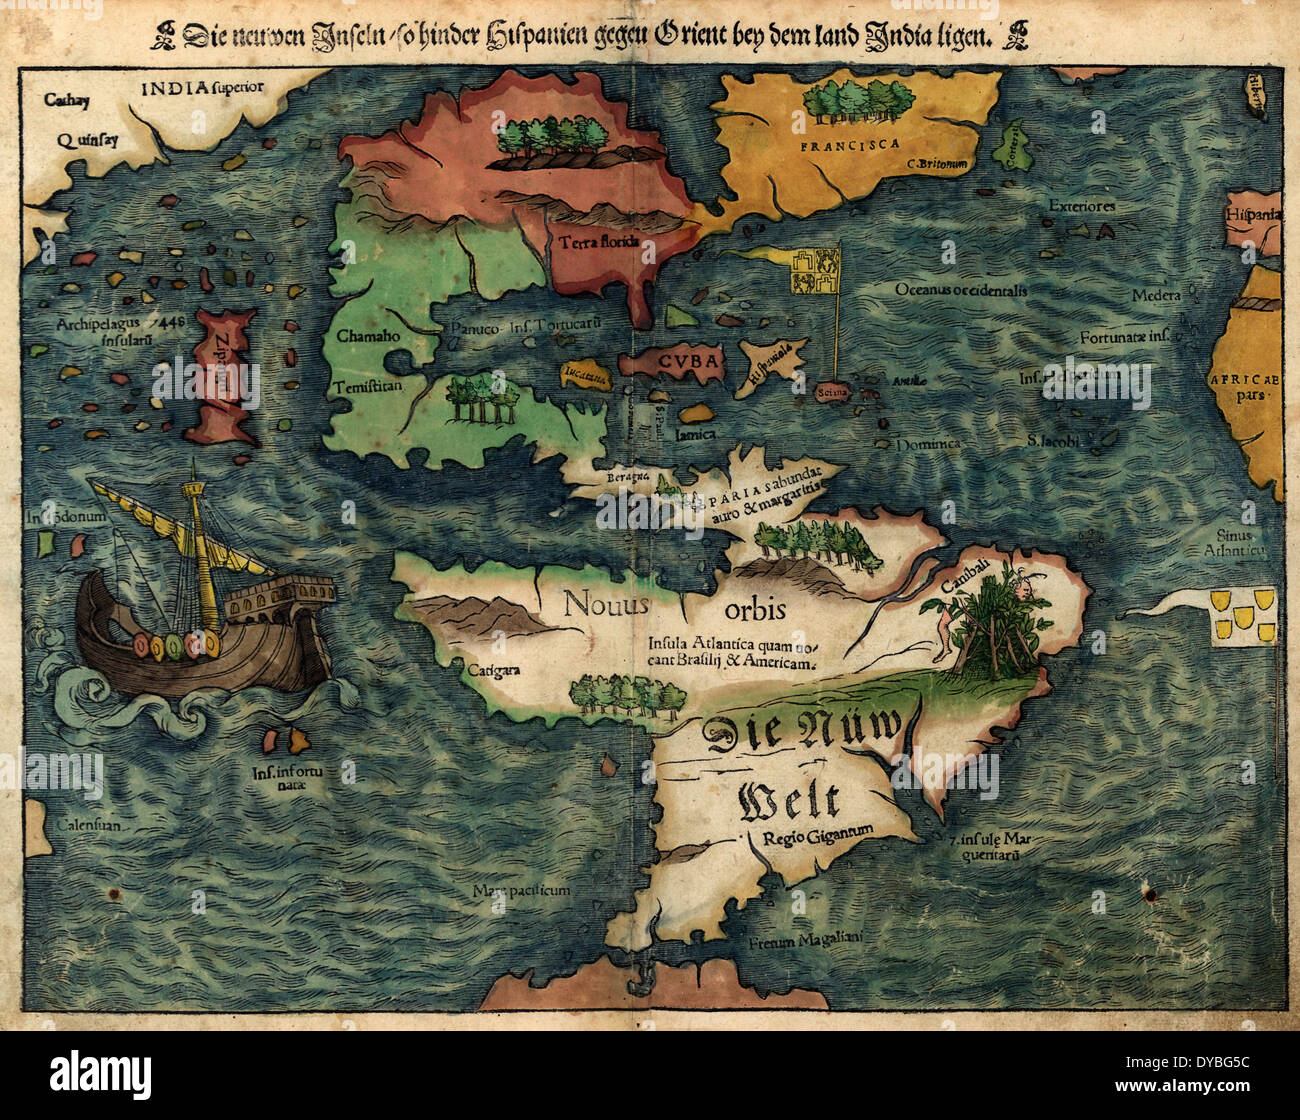 Mappa del Mondo Nuovo, 1550 Die neuwen isole, in modo da ostacolare Hispanien gegen Orient bey dem paese India ligen. Münster, Sebastian 1550 Foto Stock